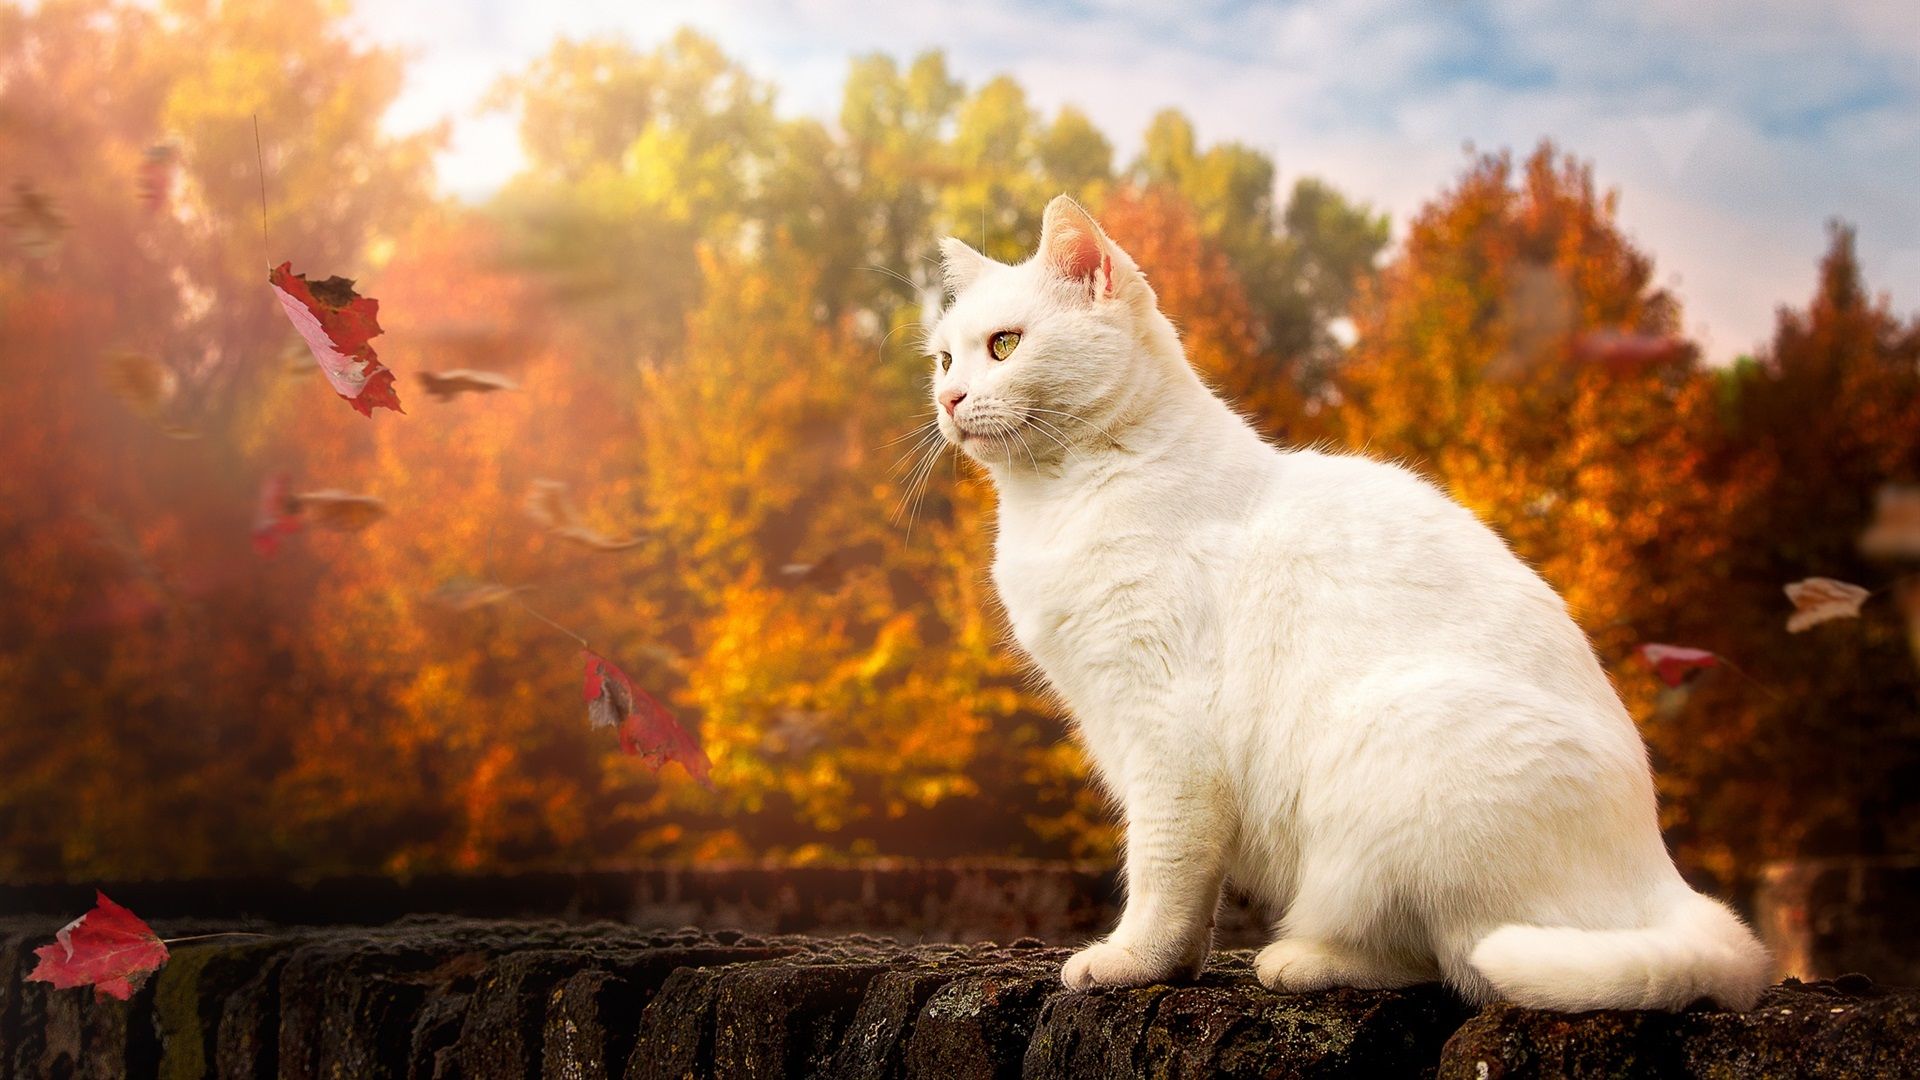 Autumn Cat Images  Free Download on Freepik